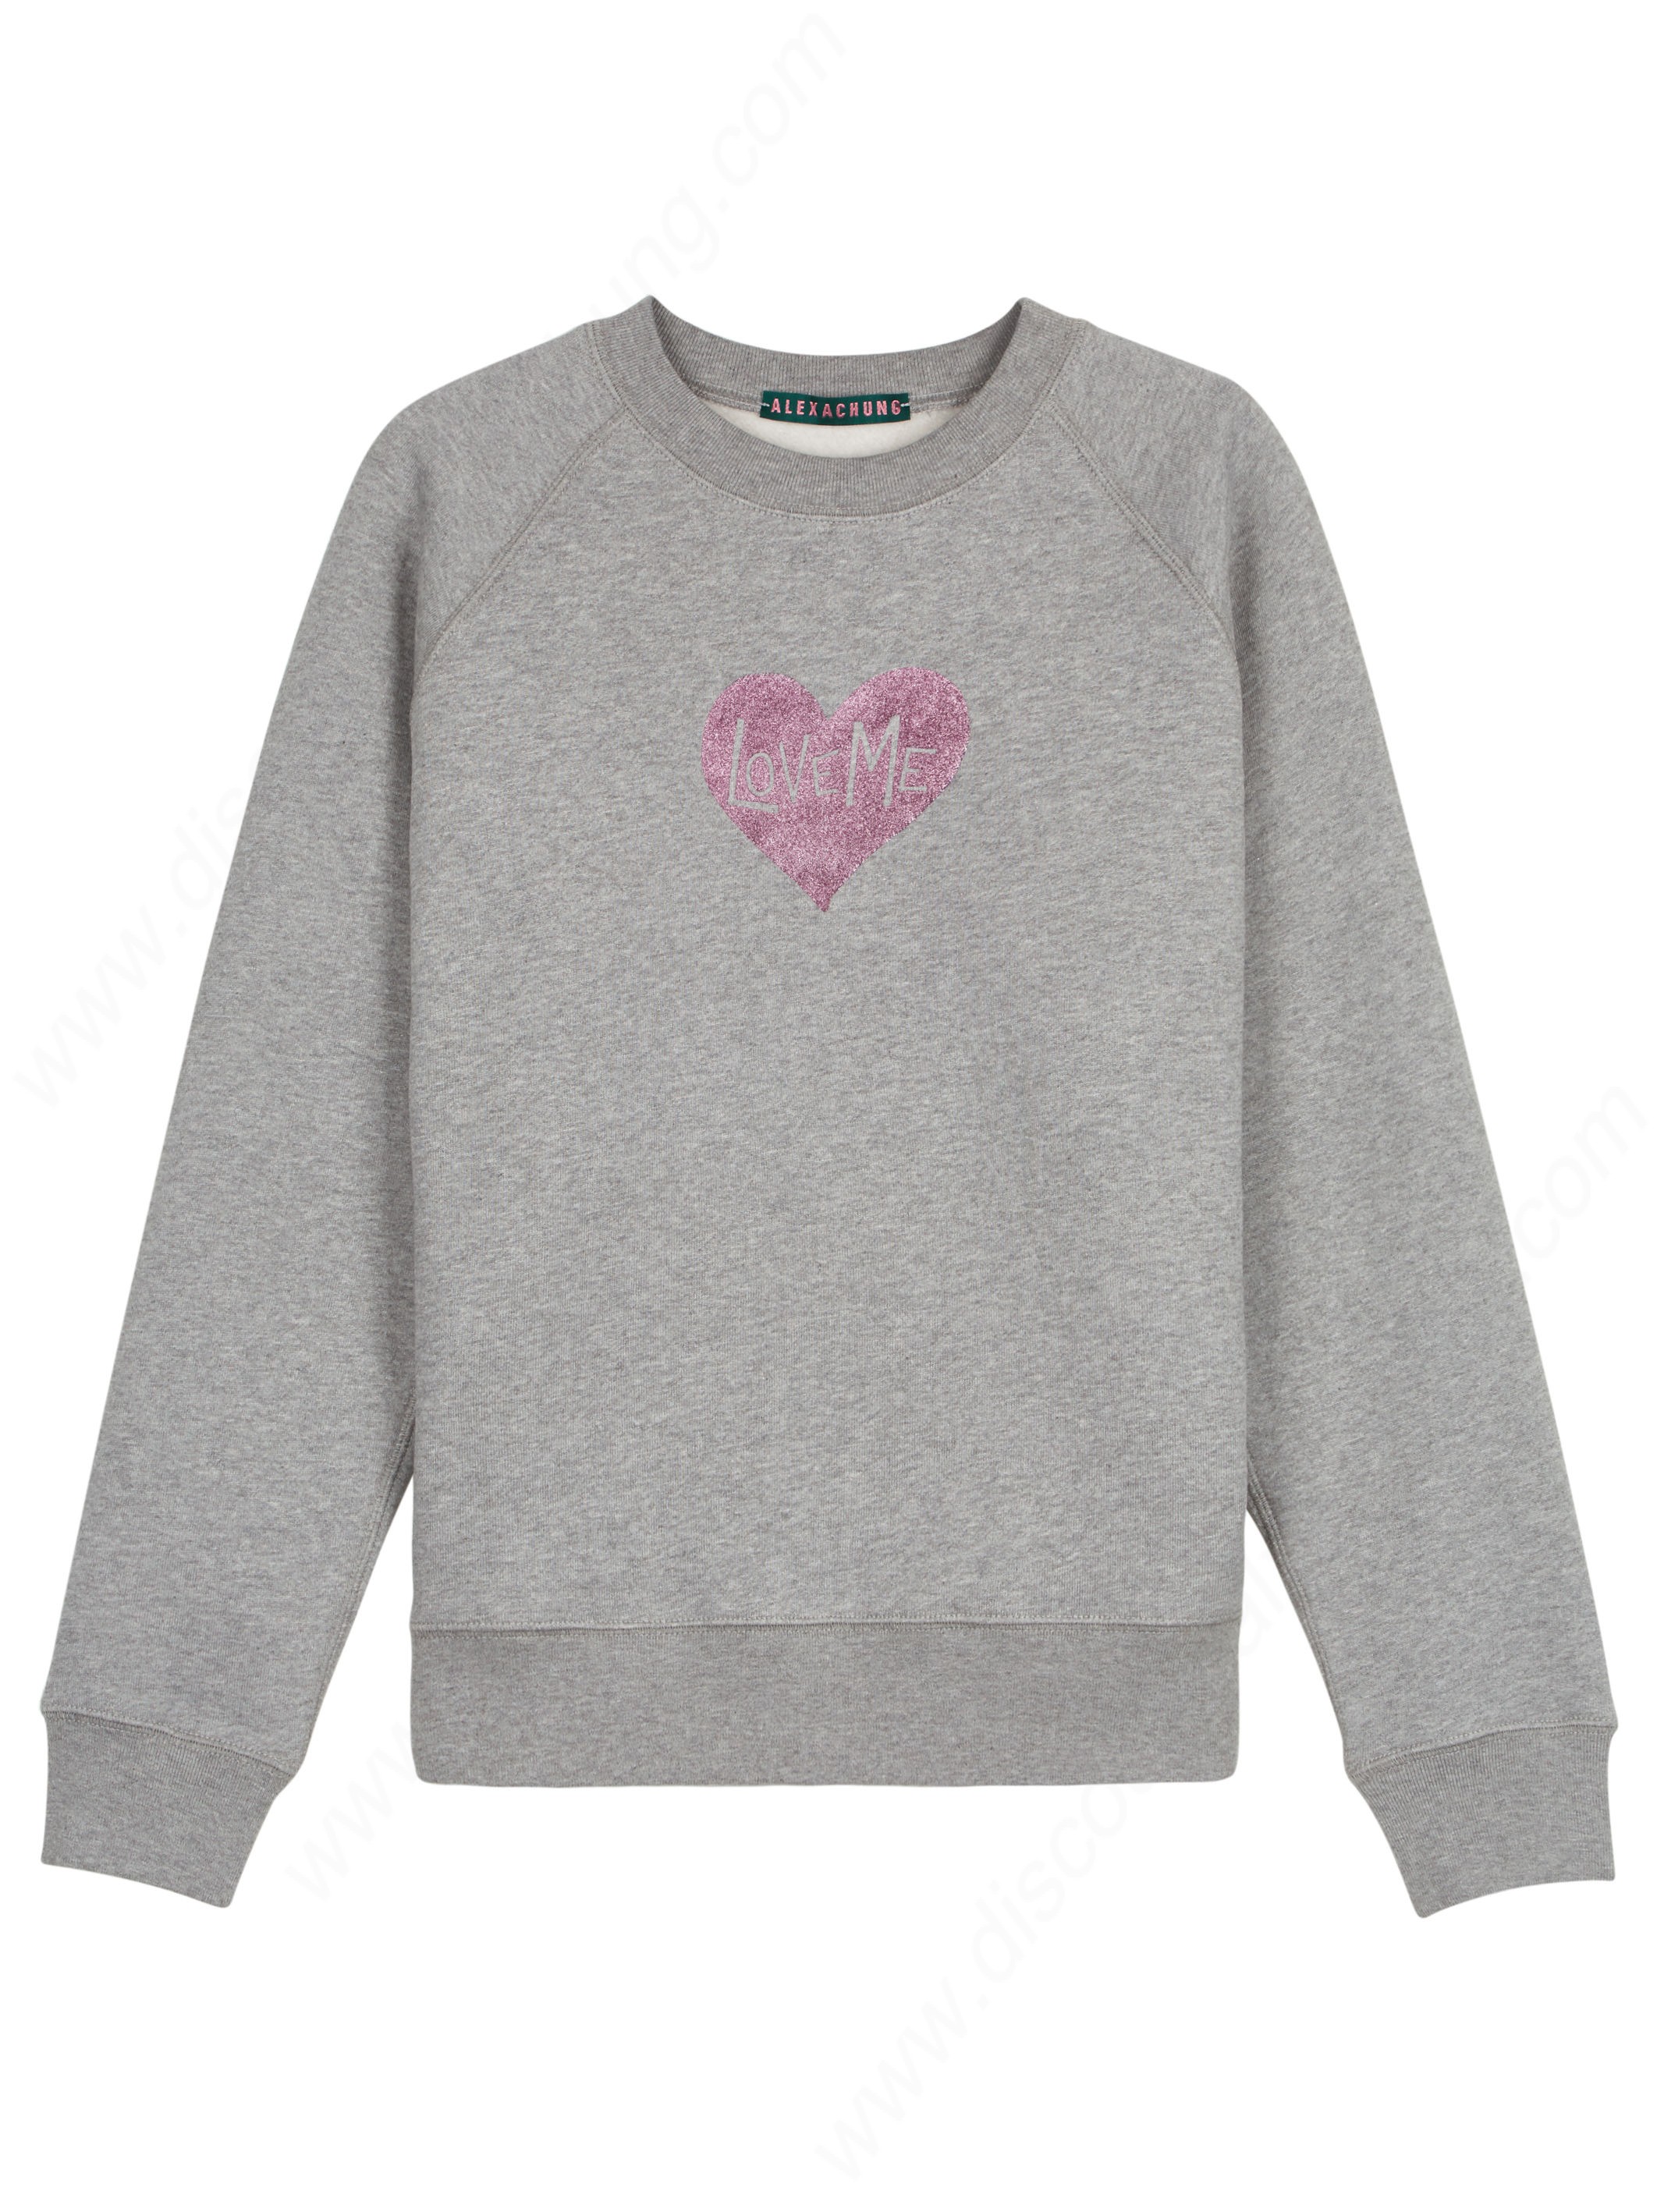 Alexachung Love Me Glitter Sweatshirt - Alexachung Love Me Glitter Sweatshirt